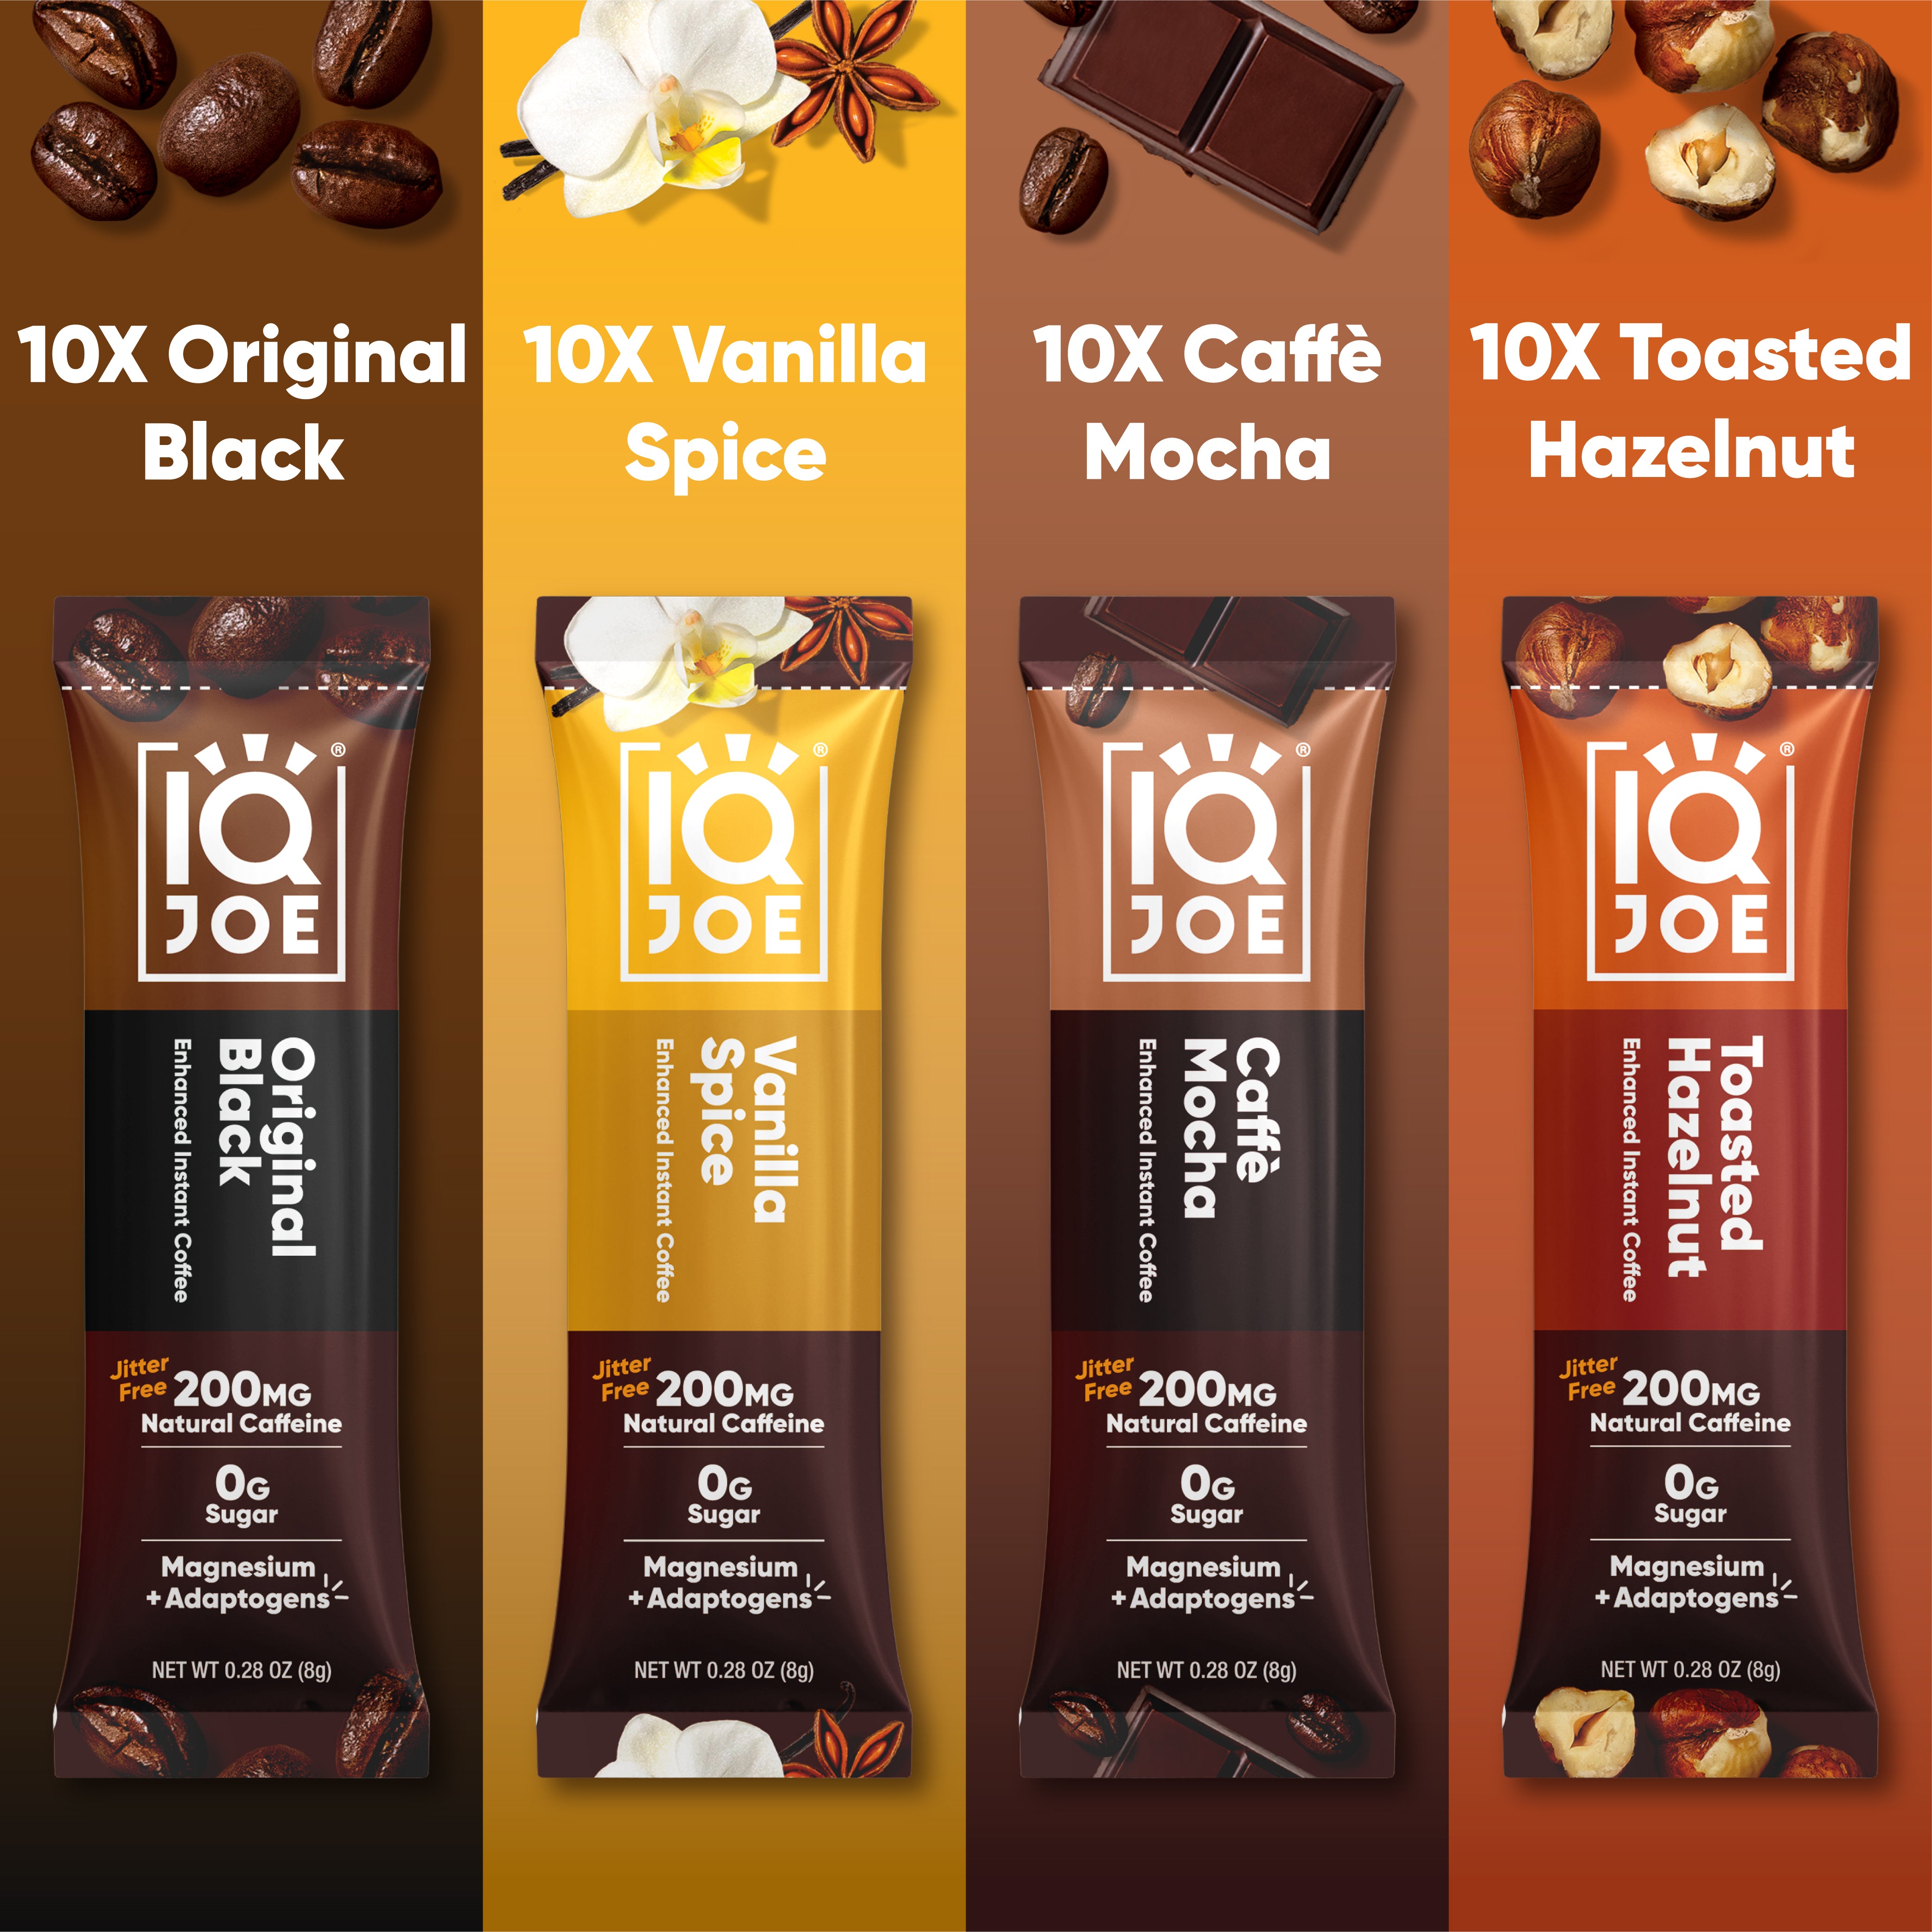 IQJOE 40-stick variety Pack Mushroom Coffee with 4 Flavors: Original Black, Vanilla Spice, Caffe Mocha, Toasted Hazelnut.